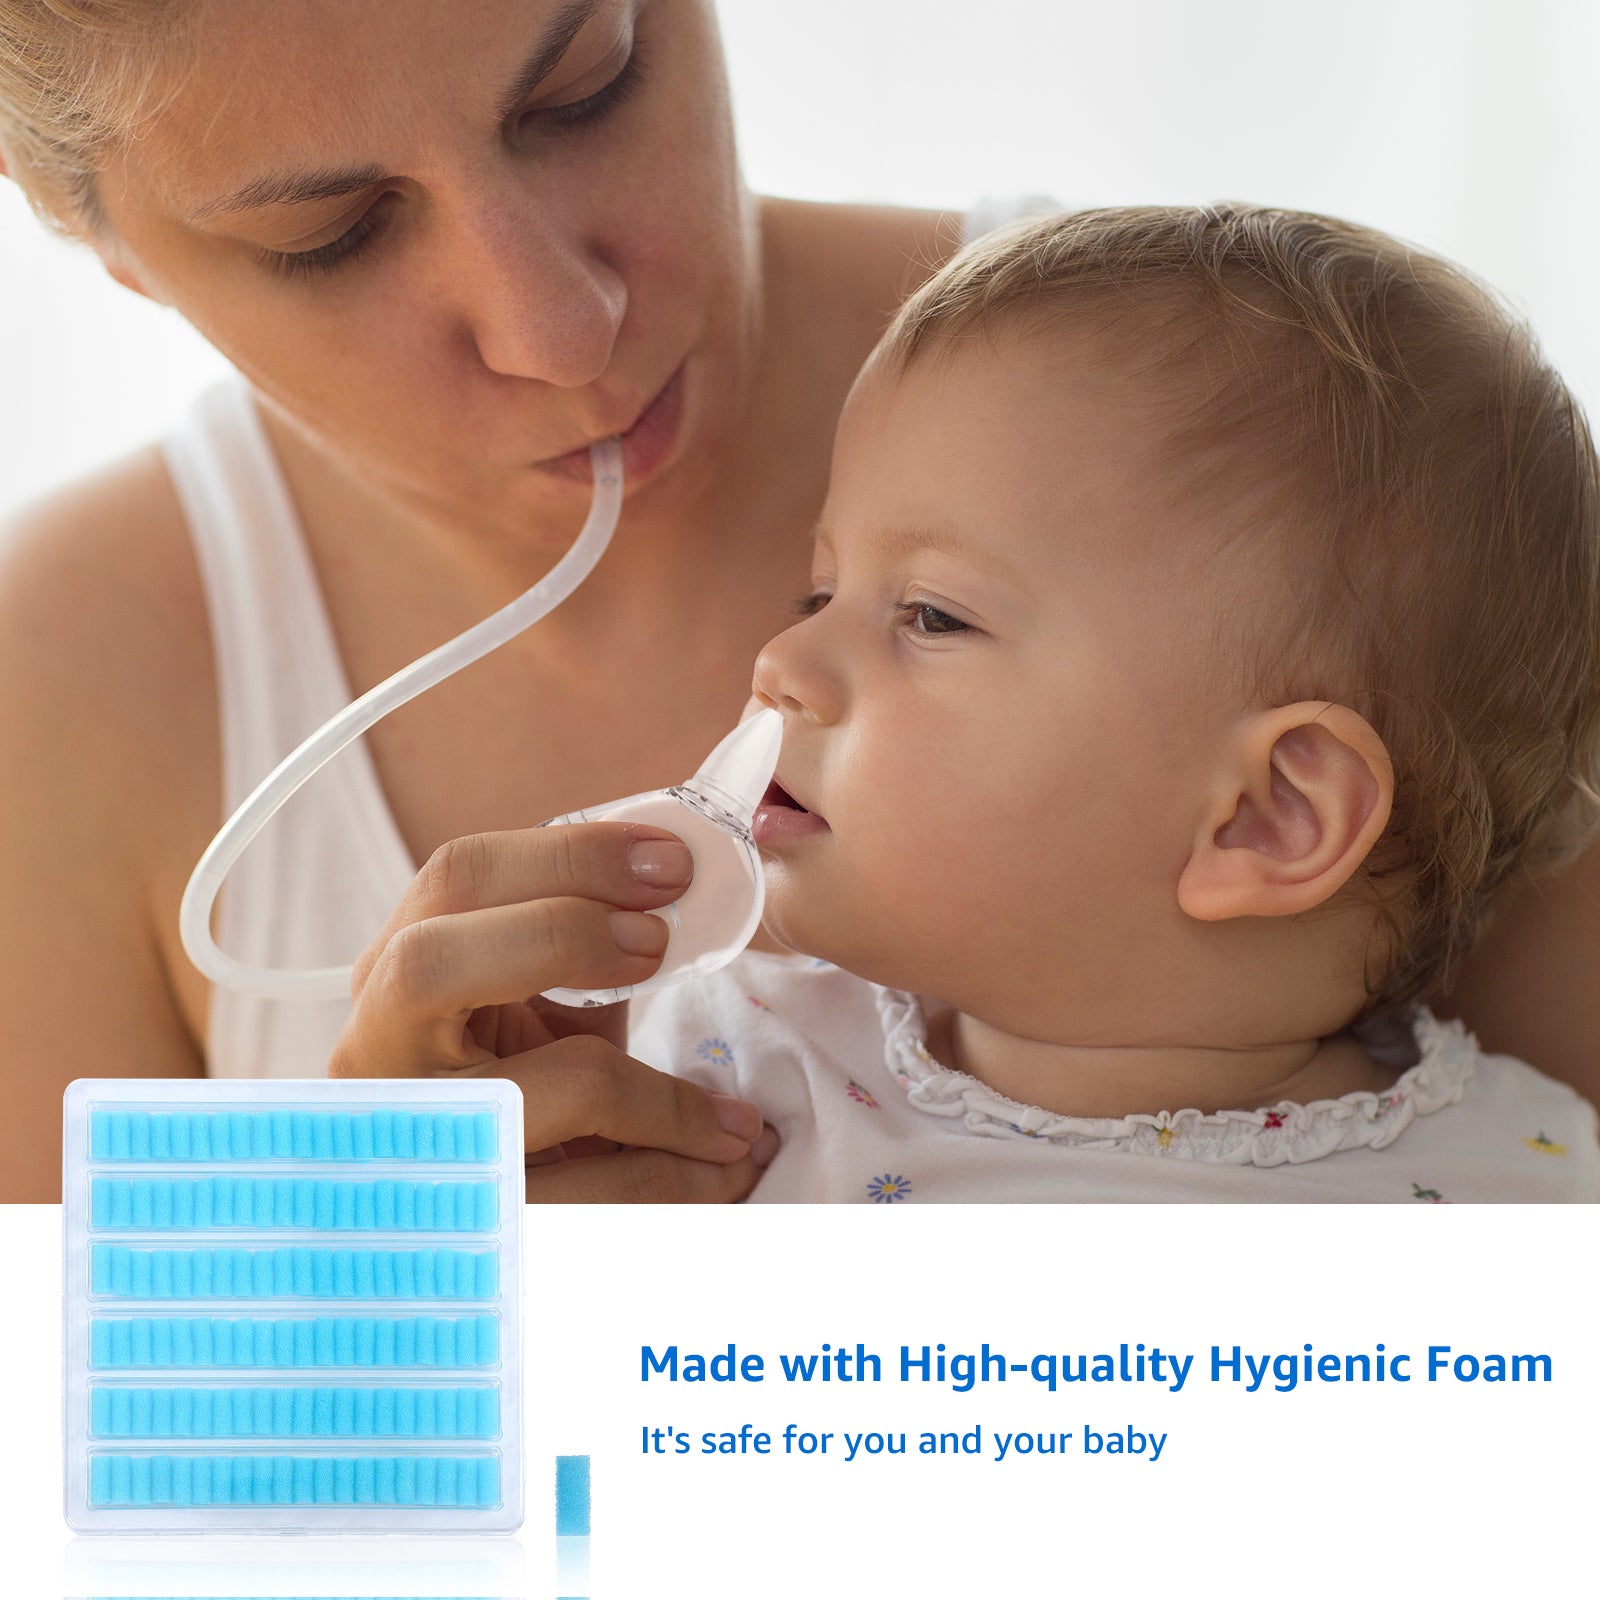 GROWNSY Premium Nasal Aspirator Hygiene Filters 120 PCS